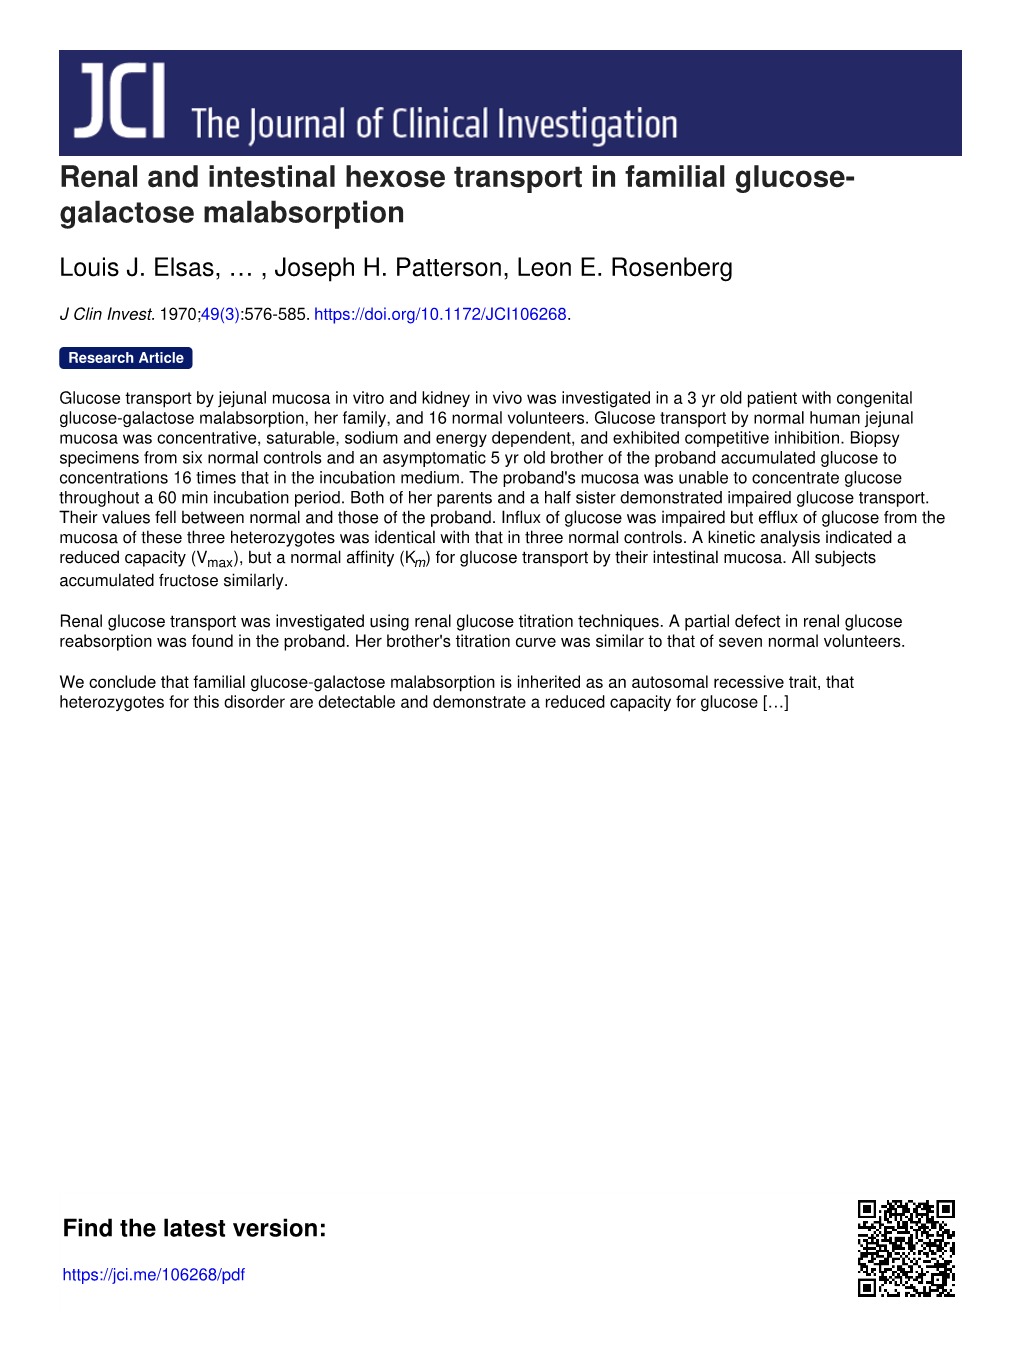 Galactose Malabsorption